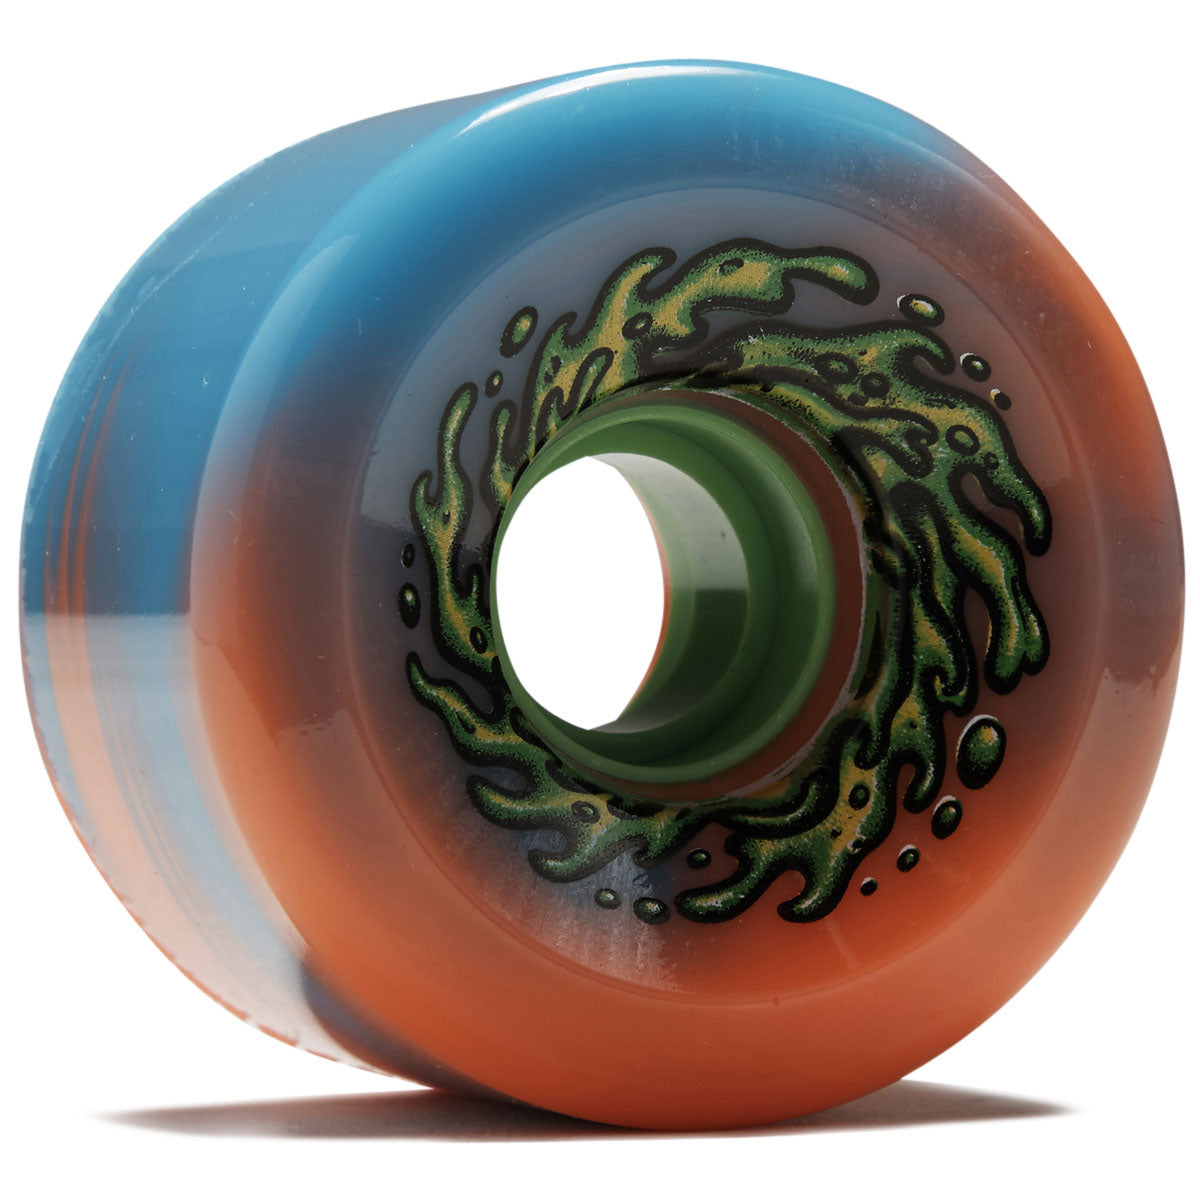 Slime Balls OG Slime 78a Skateboard Wheels - Pink/Blue Swirl - 66mm image 1